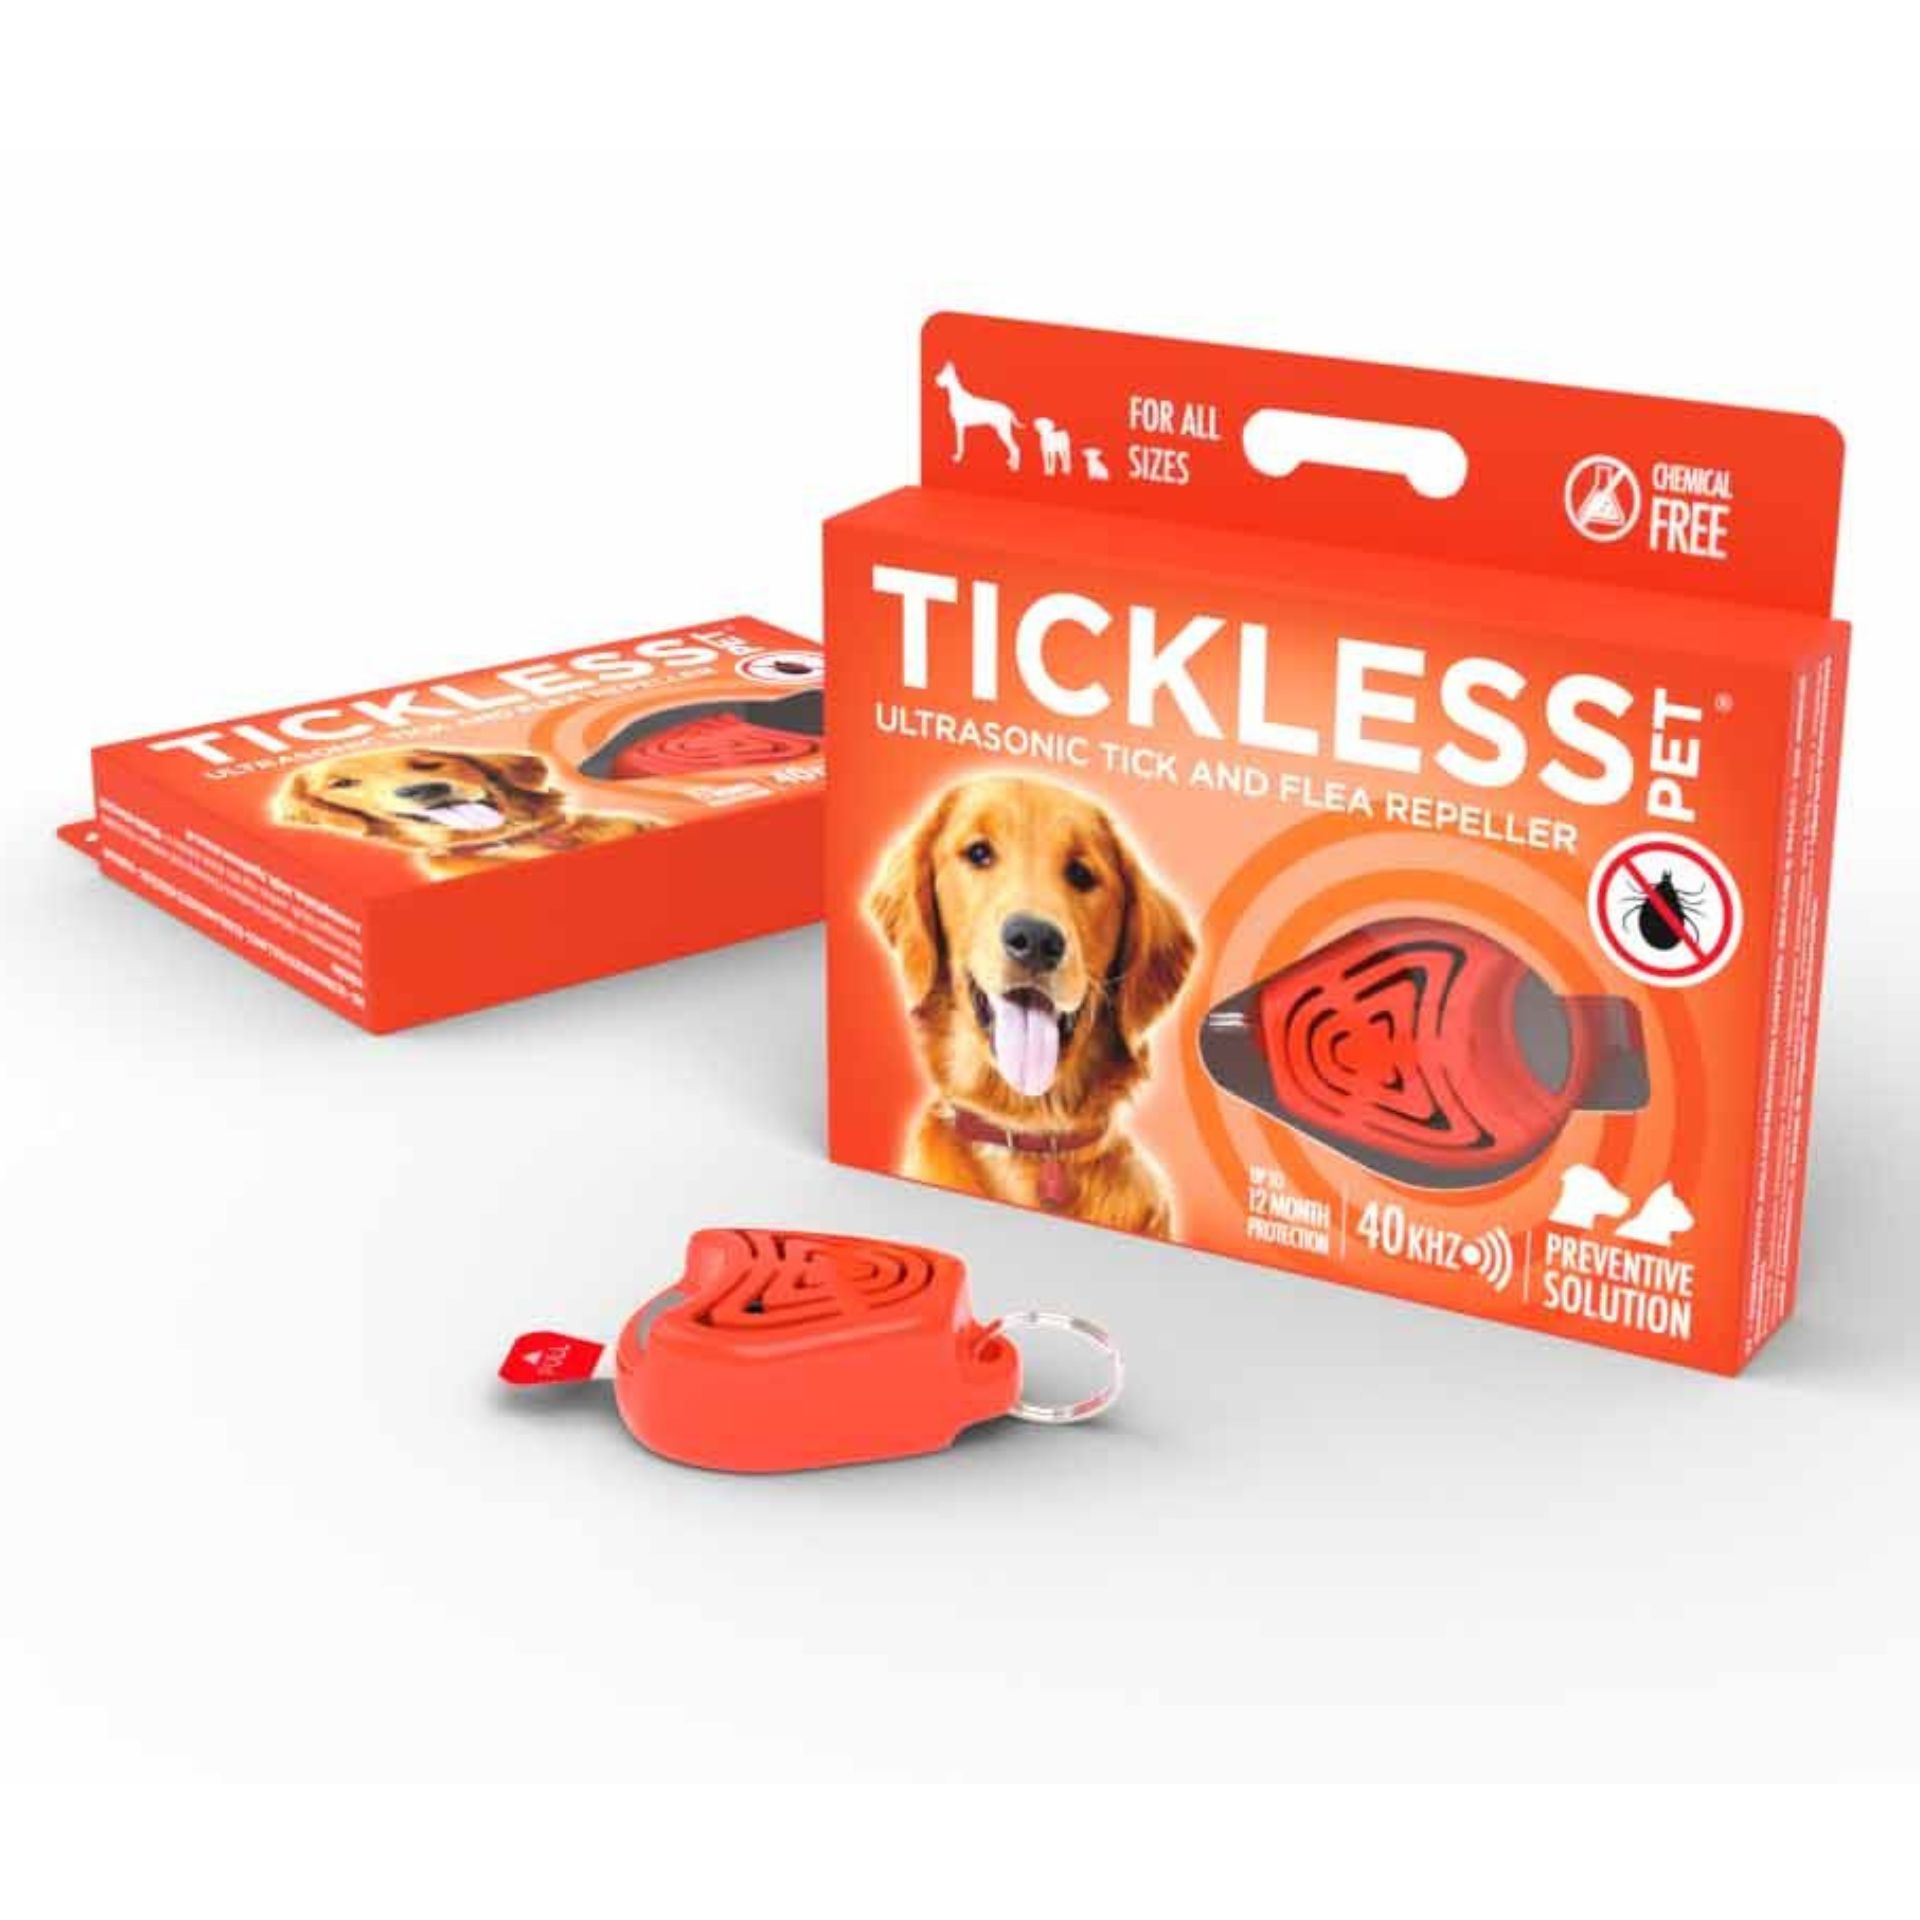 Tickless Pet Tick repellent orange